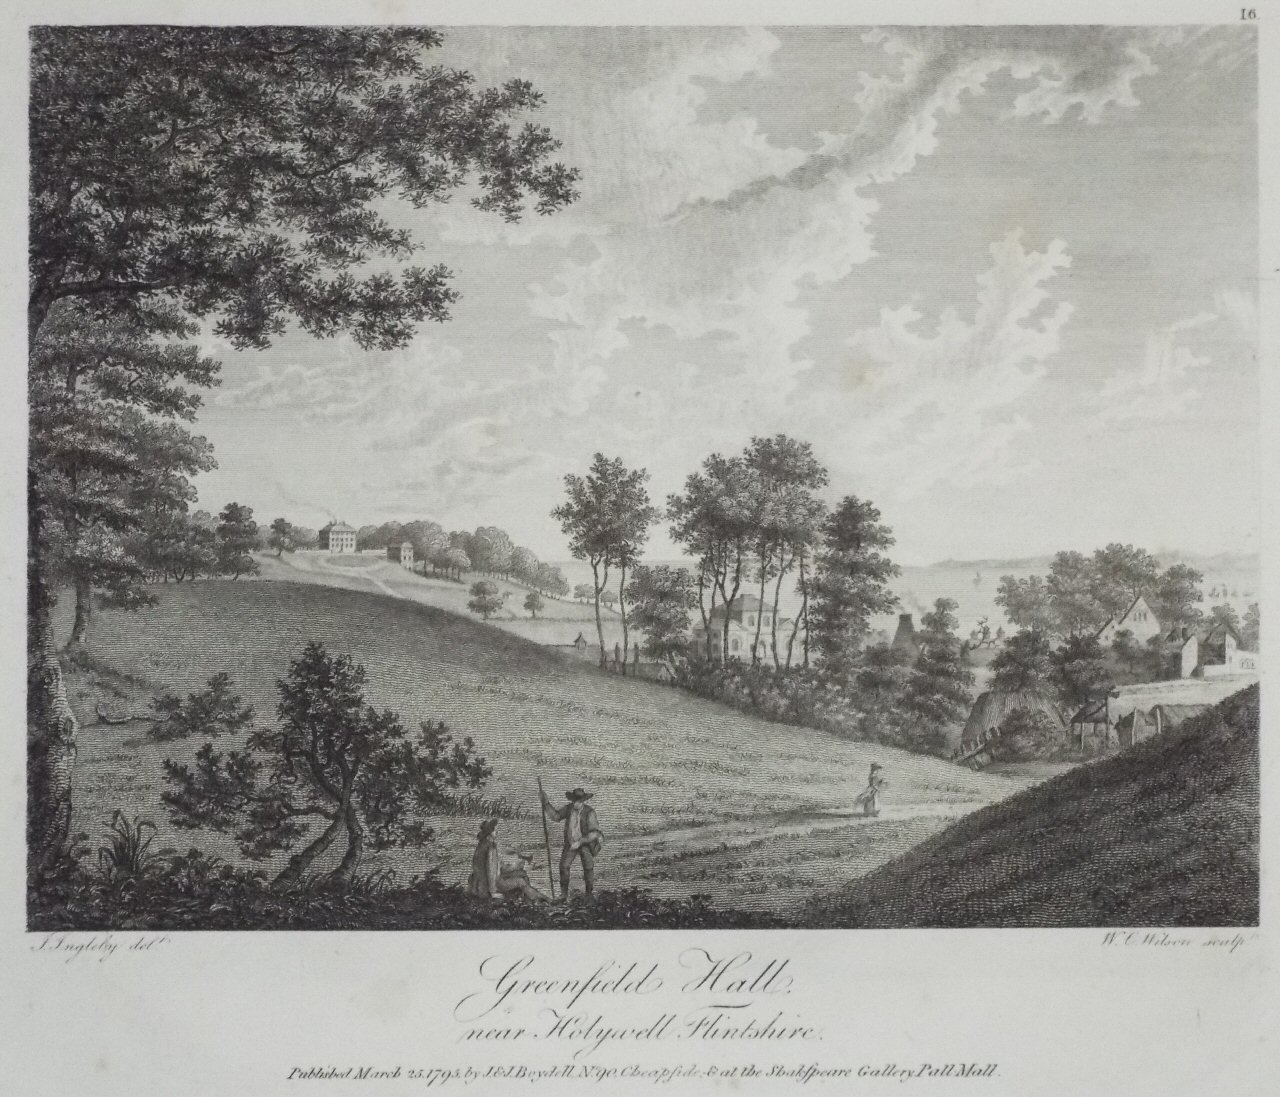 Print - Greenfield Hall near Holywell, Flintshire. - Wilson